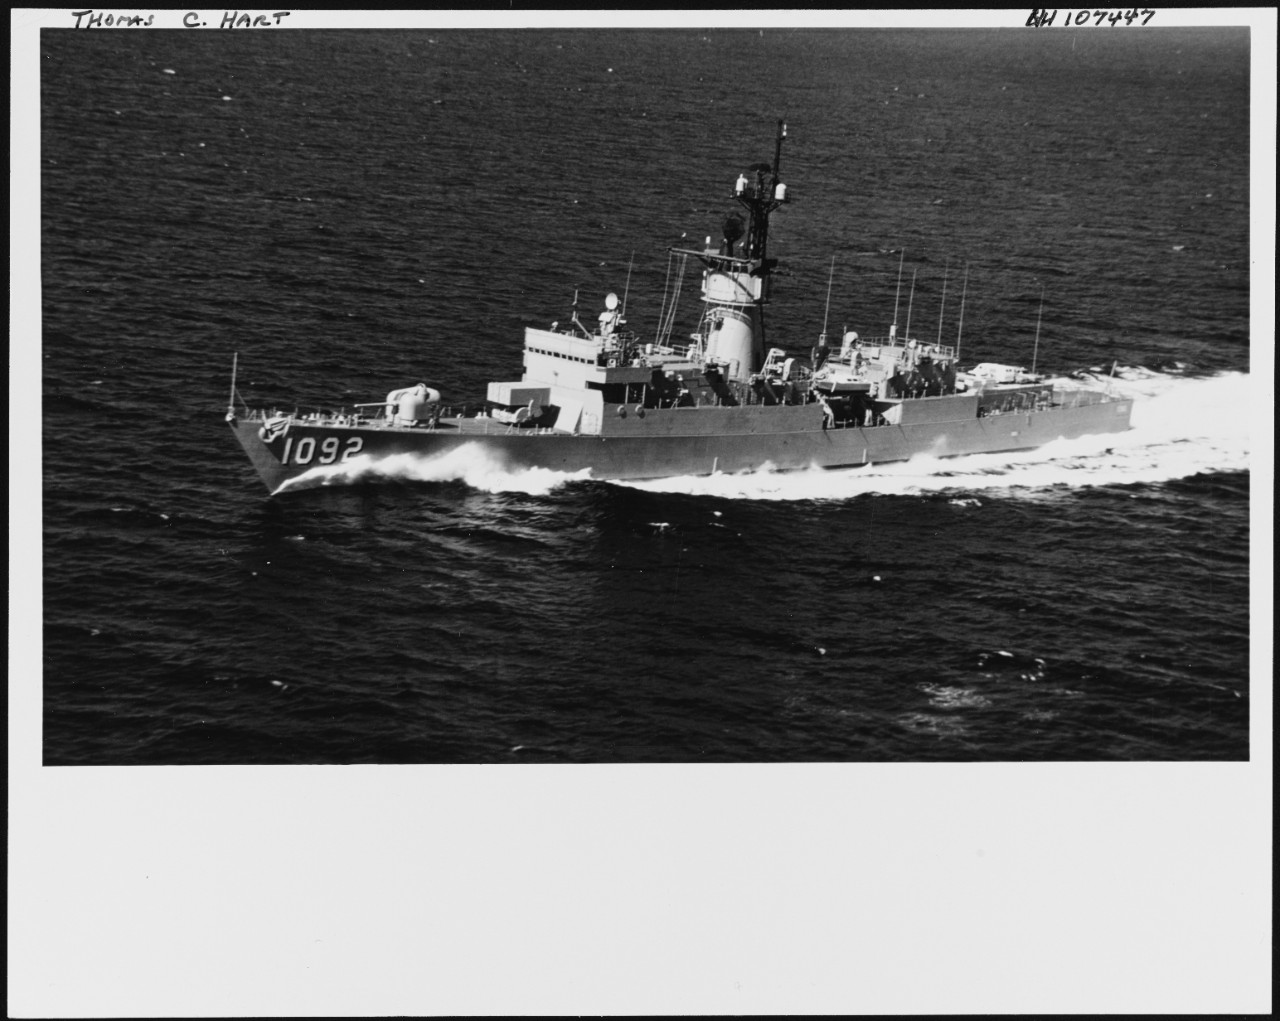 Photo #: NH 107447  USS Thomas C. Hart